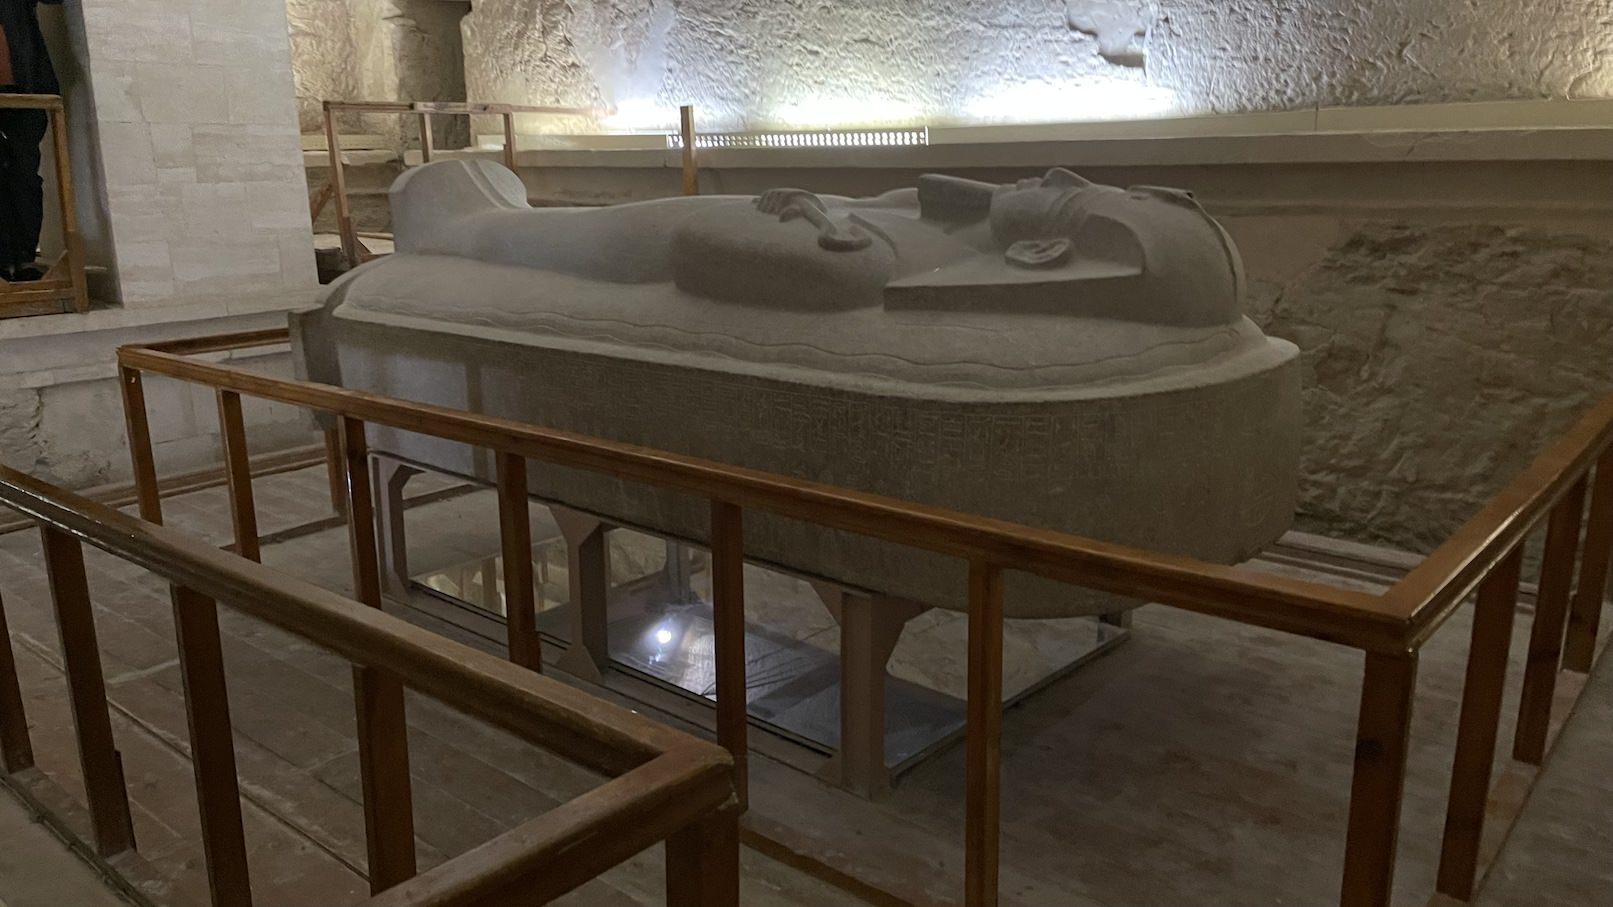 Tomb of Merenptah, Sarcophagus lid